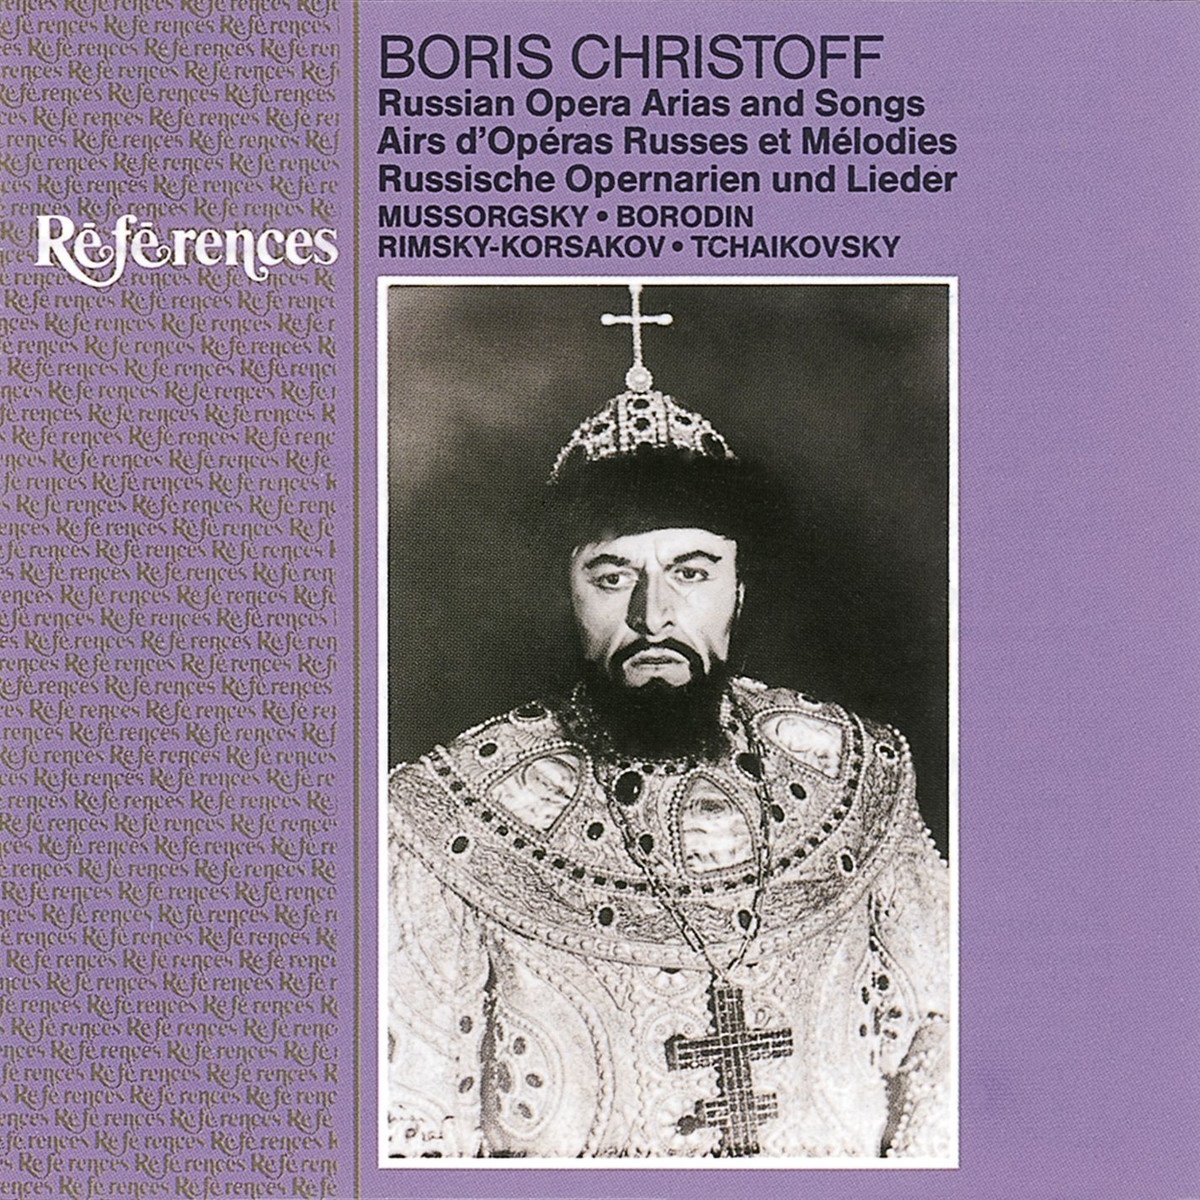 Boris Godunov (2007 Digital Remaster): Death of Boris: 'Hark, 'tis the funeral bell' (Act 4)